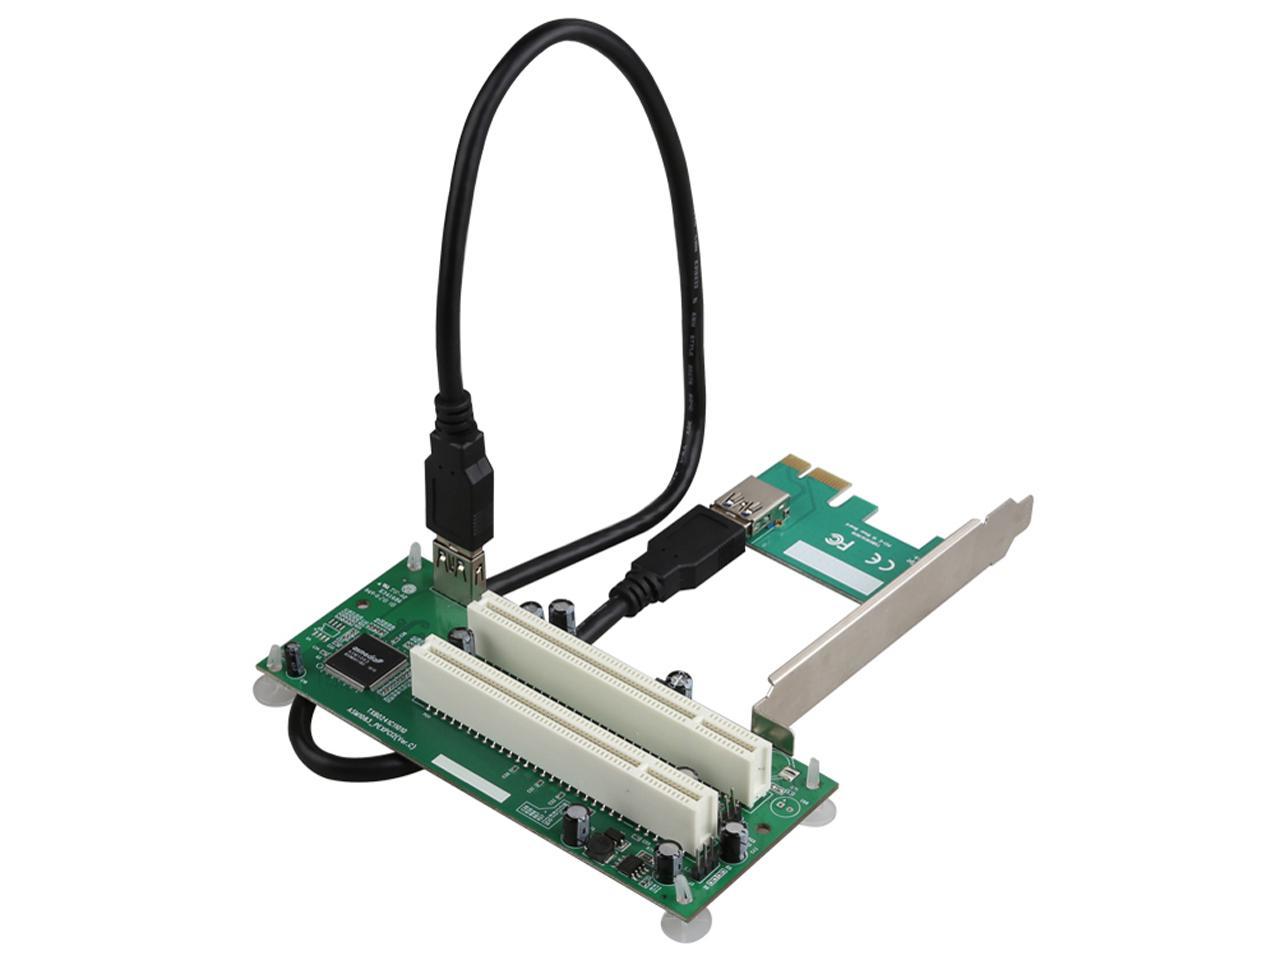 lijun PCIE to PCI Express x16 Conversion Card PCI-E Expansion Converter Adapter Board